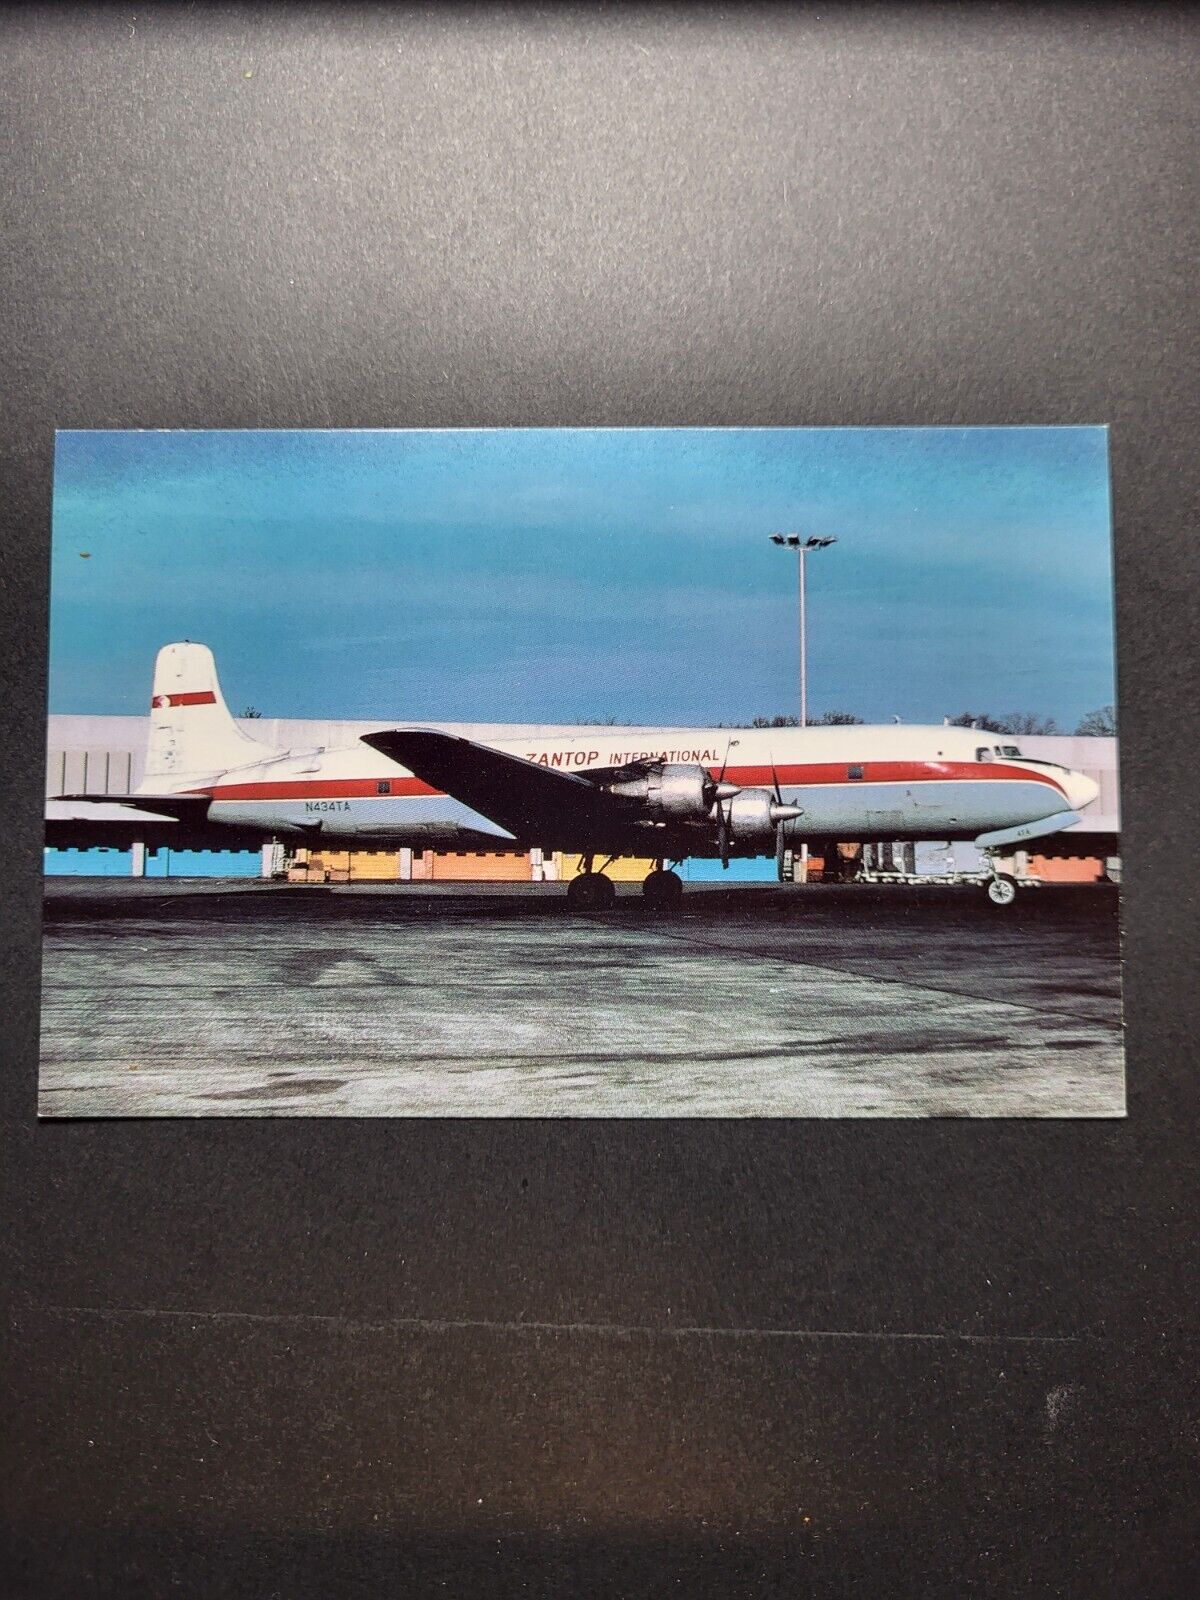 Postcard Historical Aircraft Postcard Zantop International DC-6